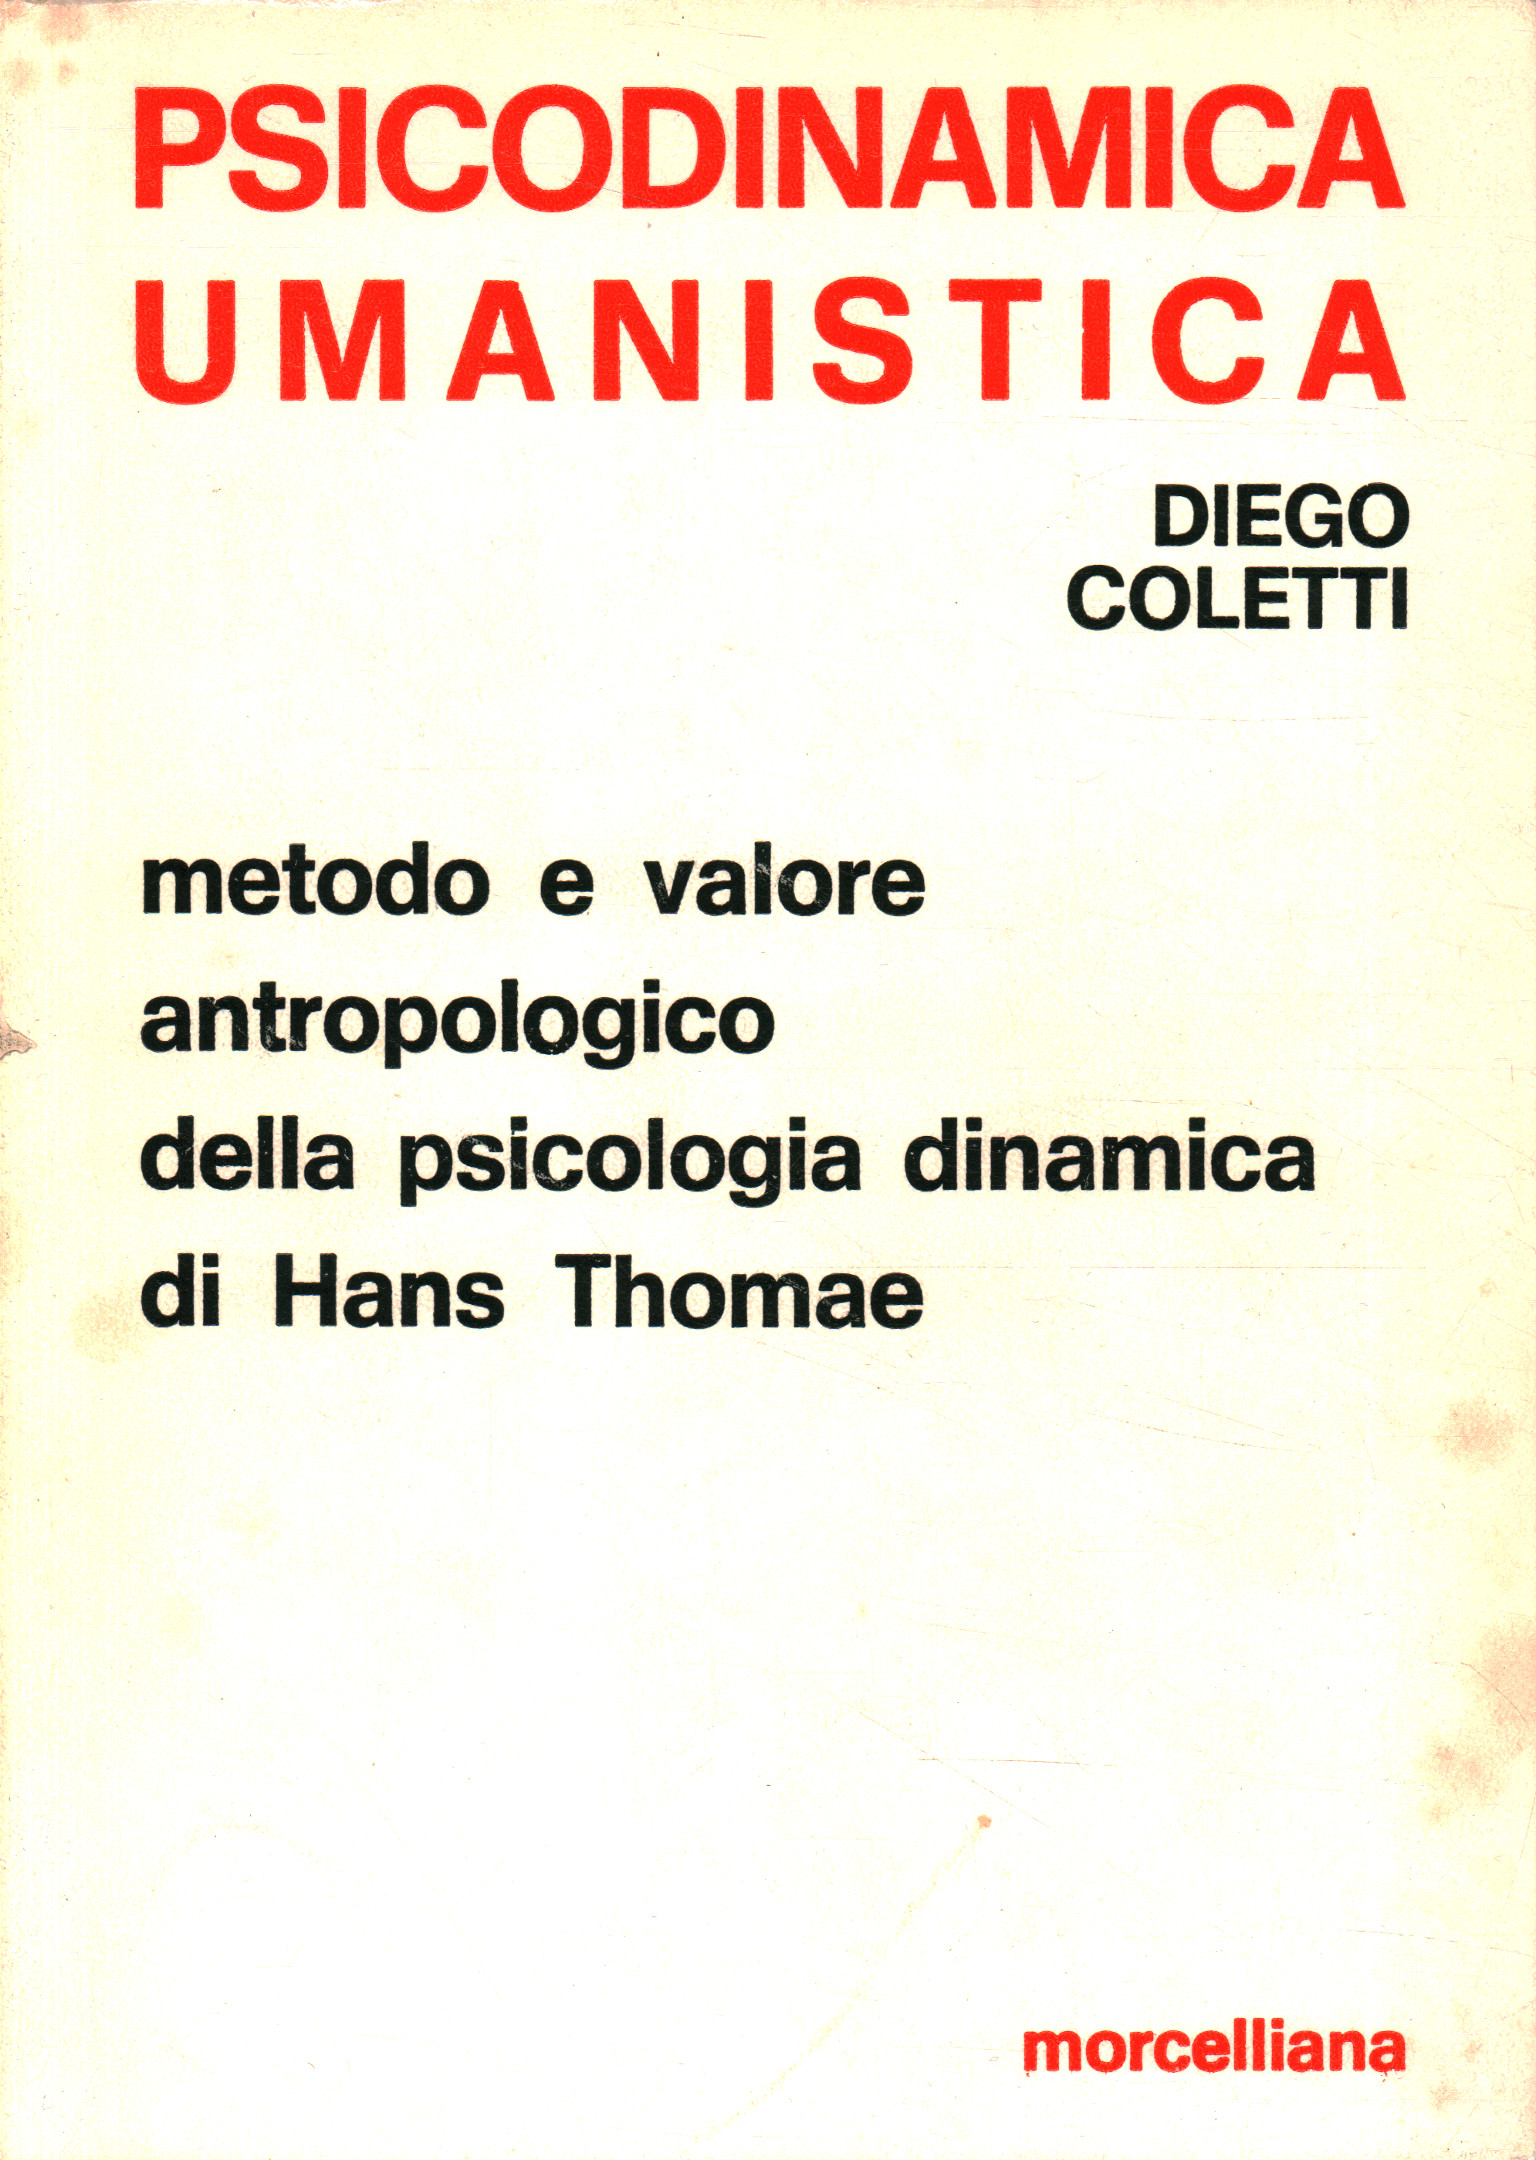 The dynamic psychology of Hans Thomae